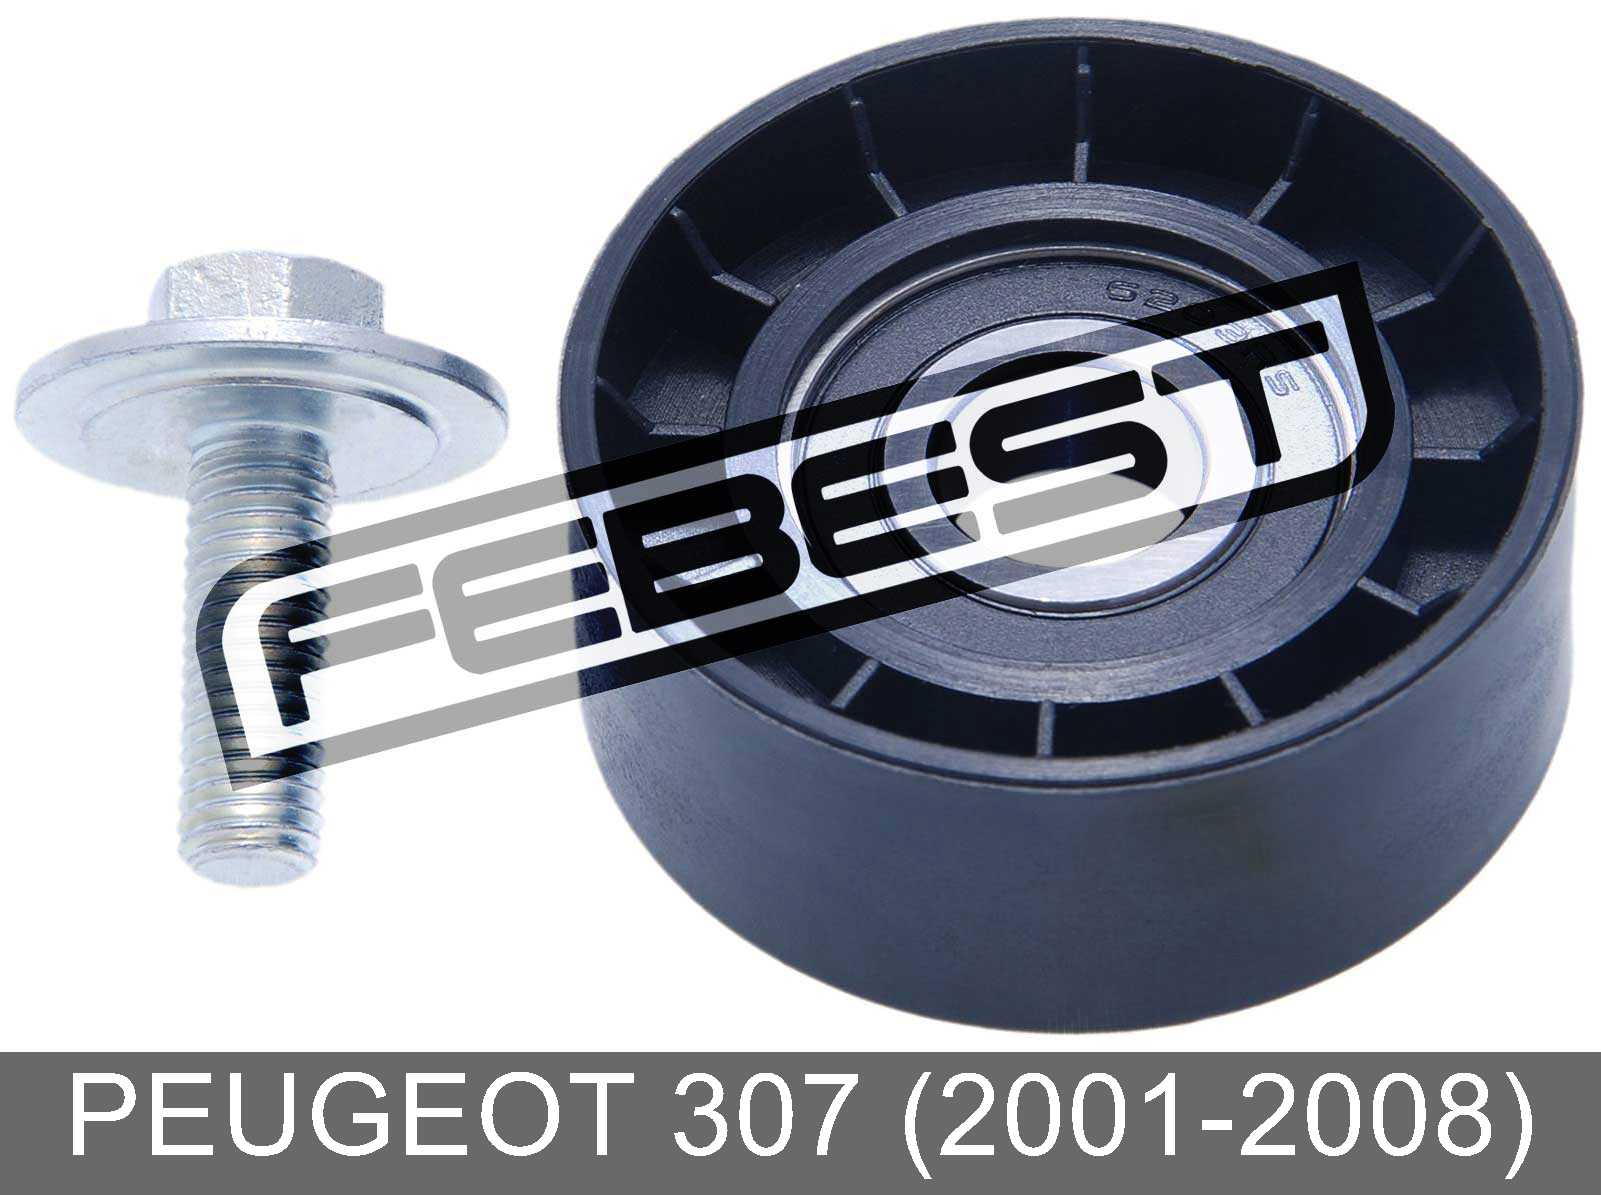 PEUGEOT 2187-FOCII_KI Product Photo